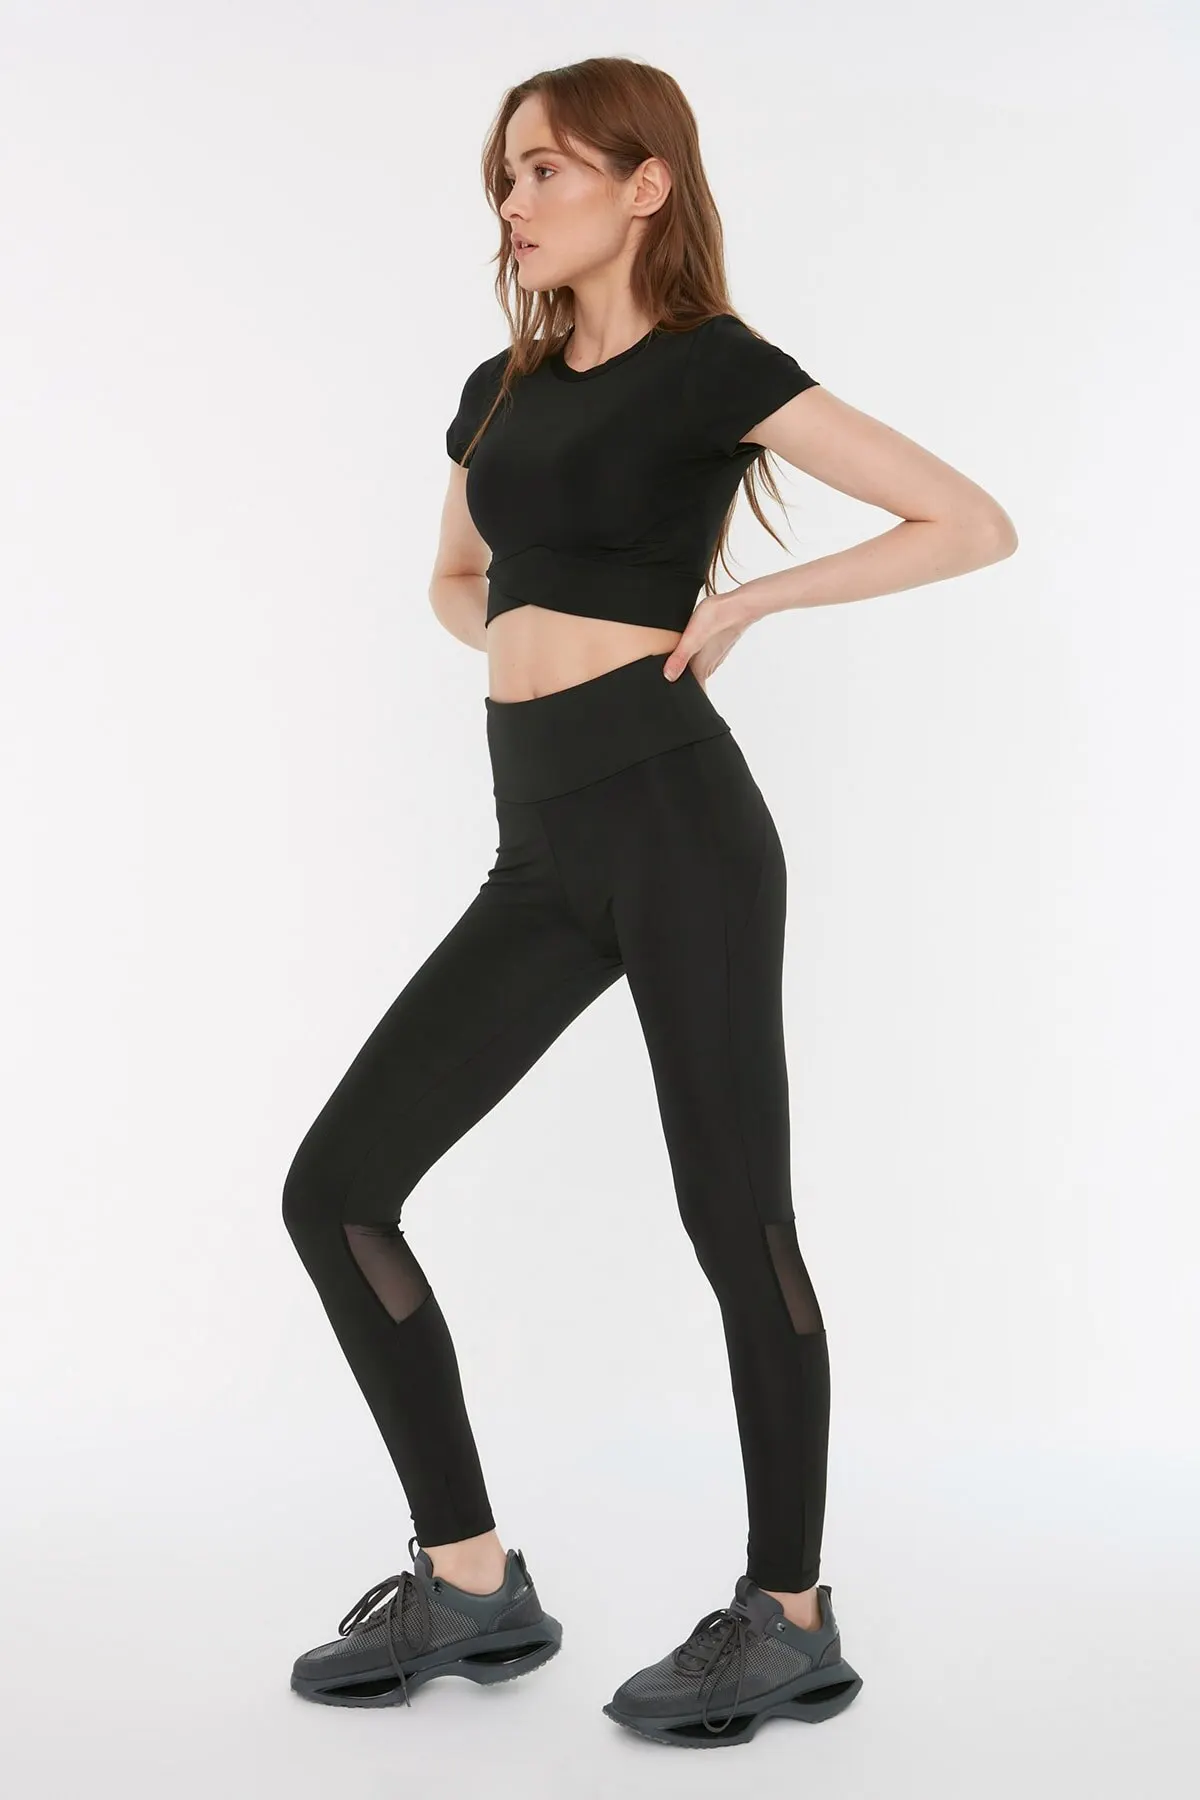 

Women's Leggings Yoga Pants Black Tulle Detailed Sport Leggings Fitness Sport Butt Lifting Tights Sexy Stretch